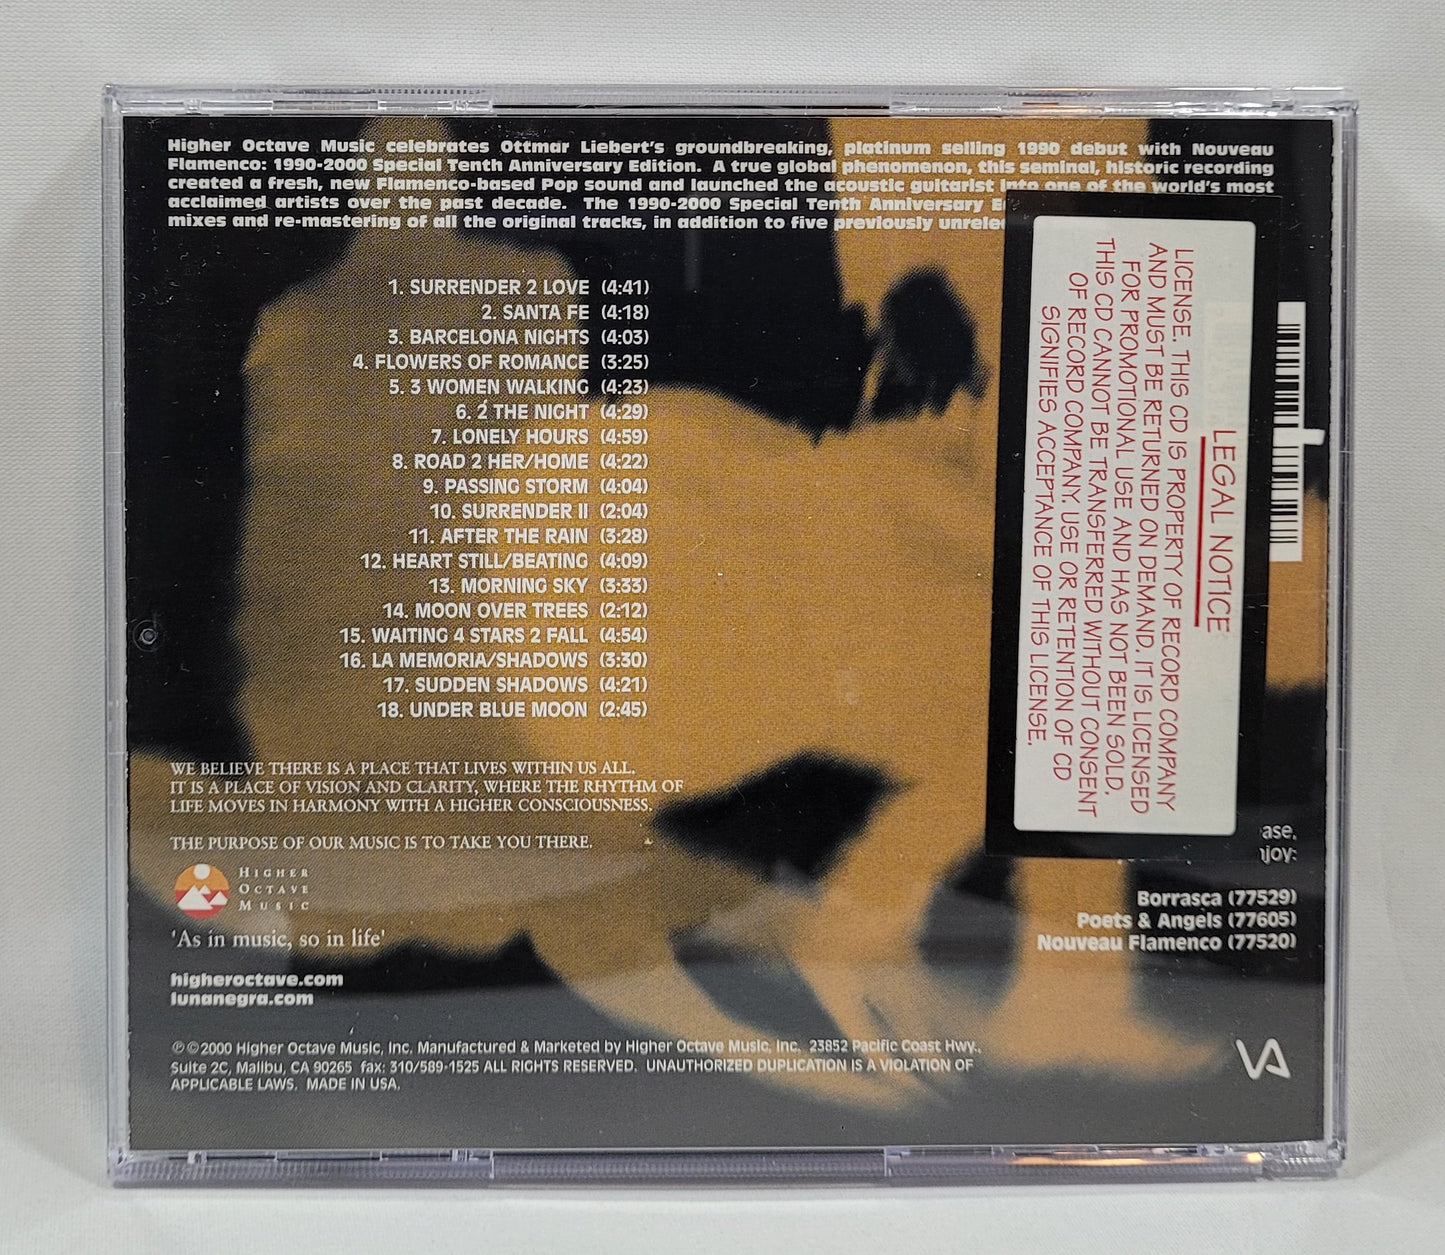 Ottmar Liebert - Nouveau Flamenco [2000 Promo] [Used CD]